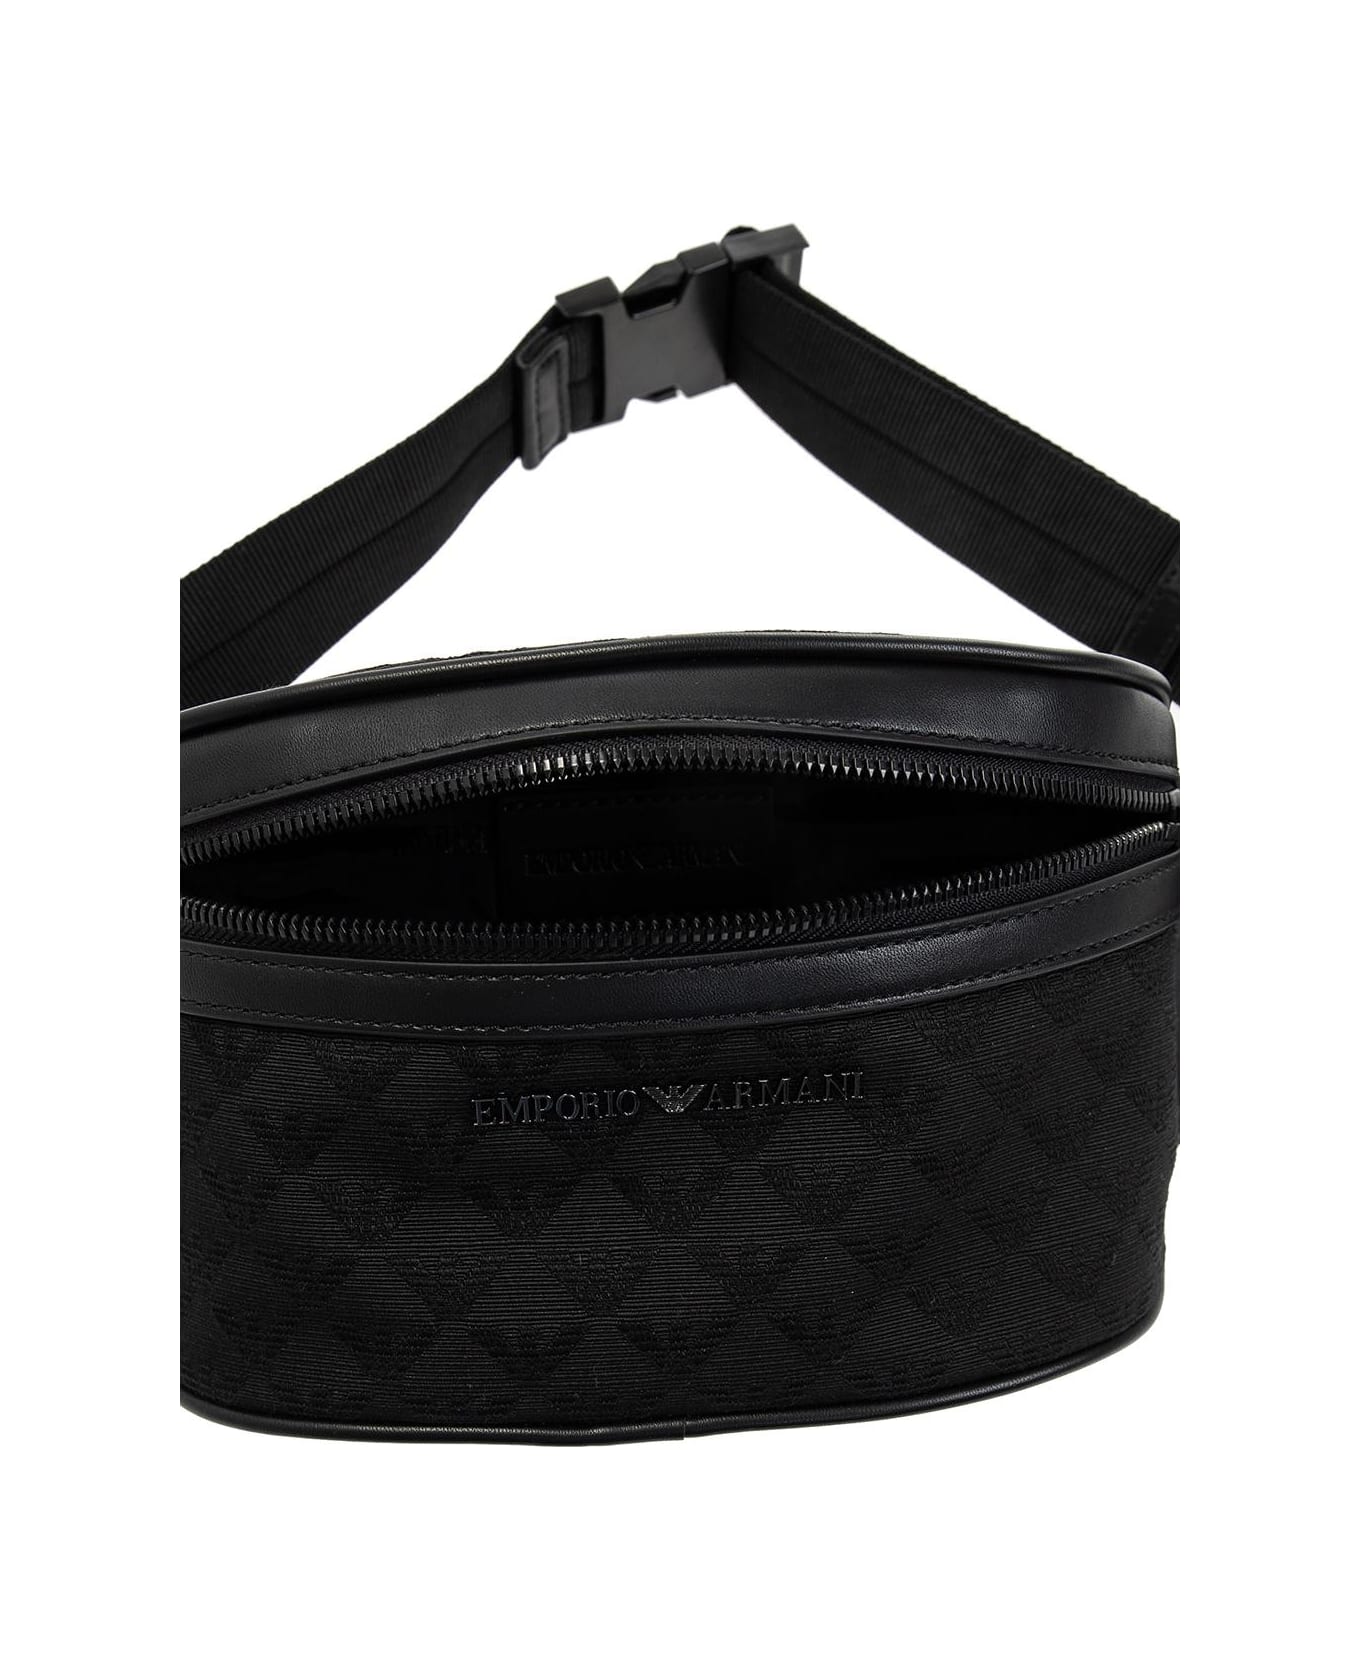 Emporio Armani Belt Bag With Logo - Black/Black/Black